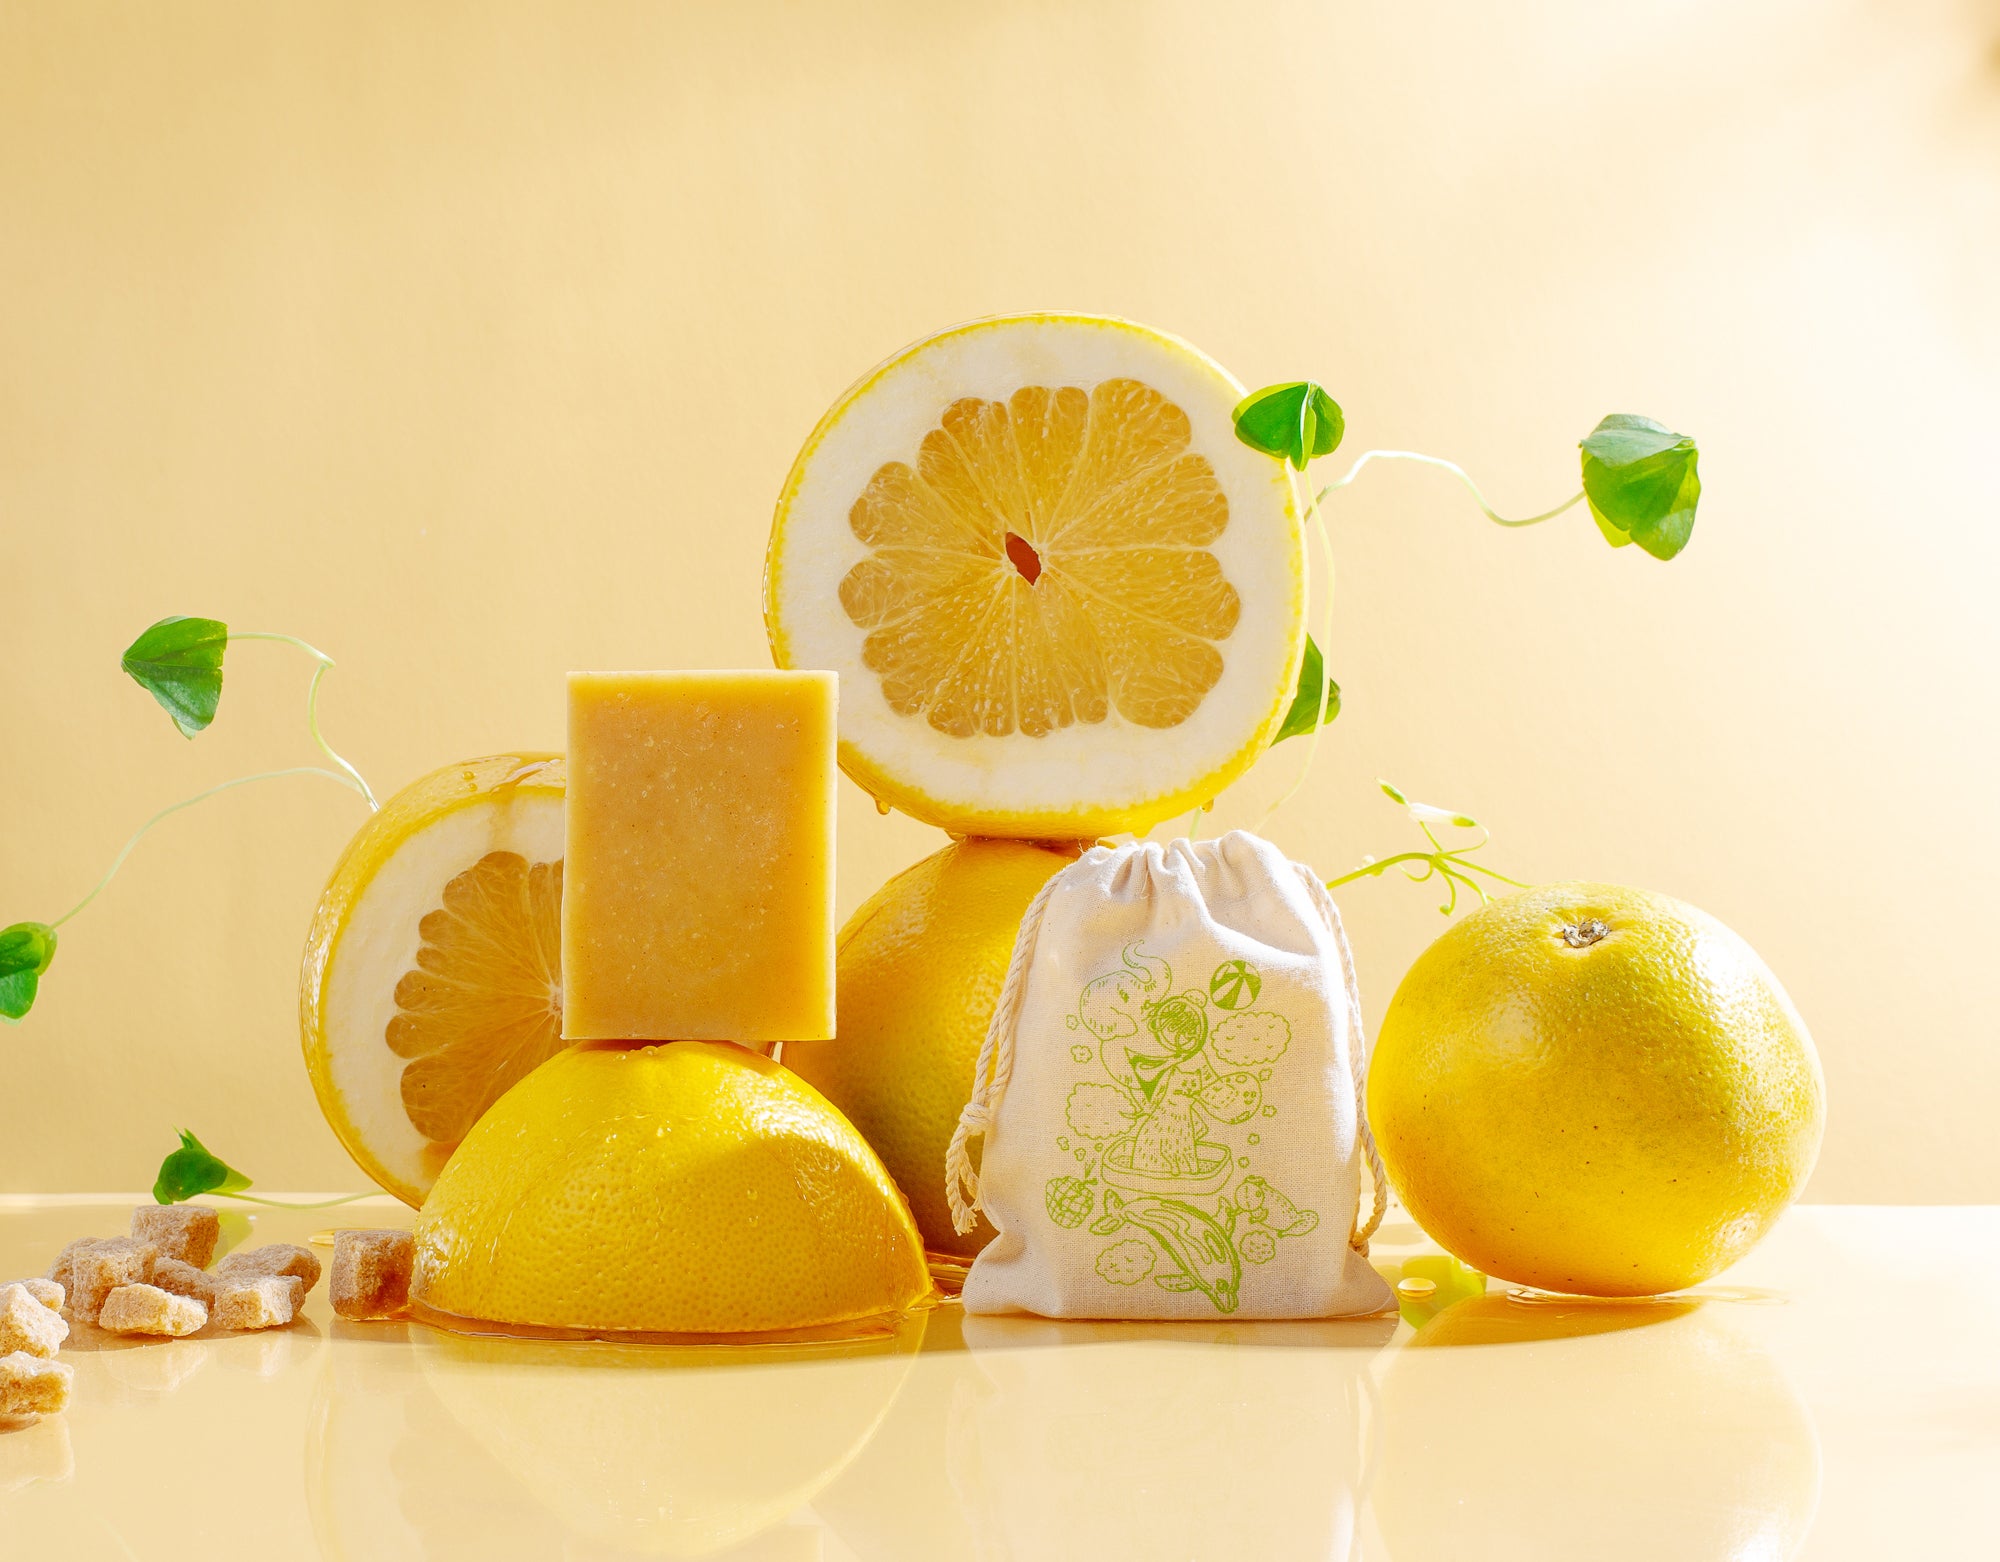 Yuzu Chamomile soap, yuzu slices, herbs sit on a sunny honey-yellow background